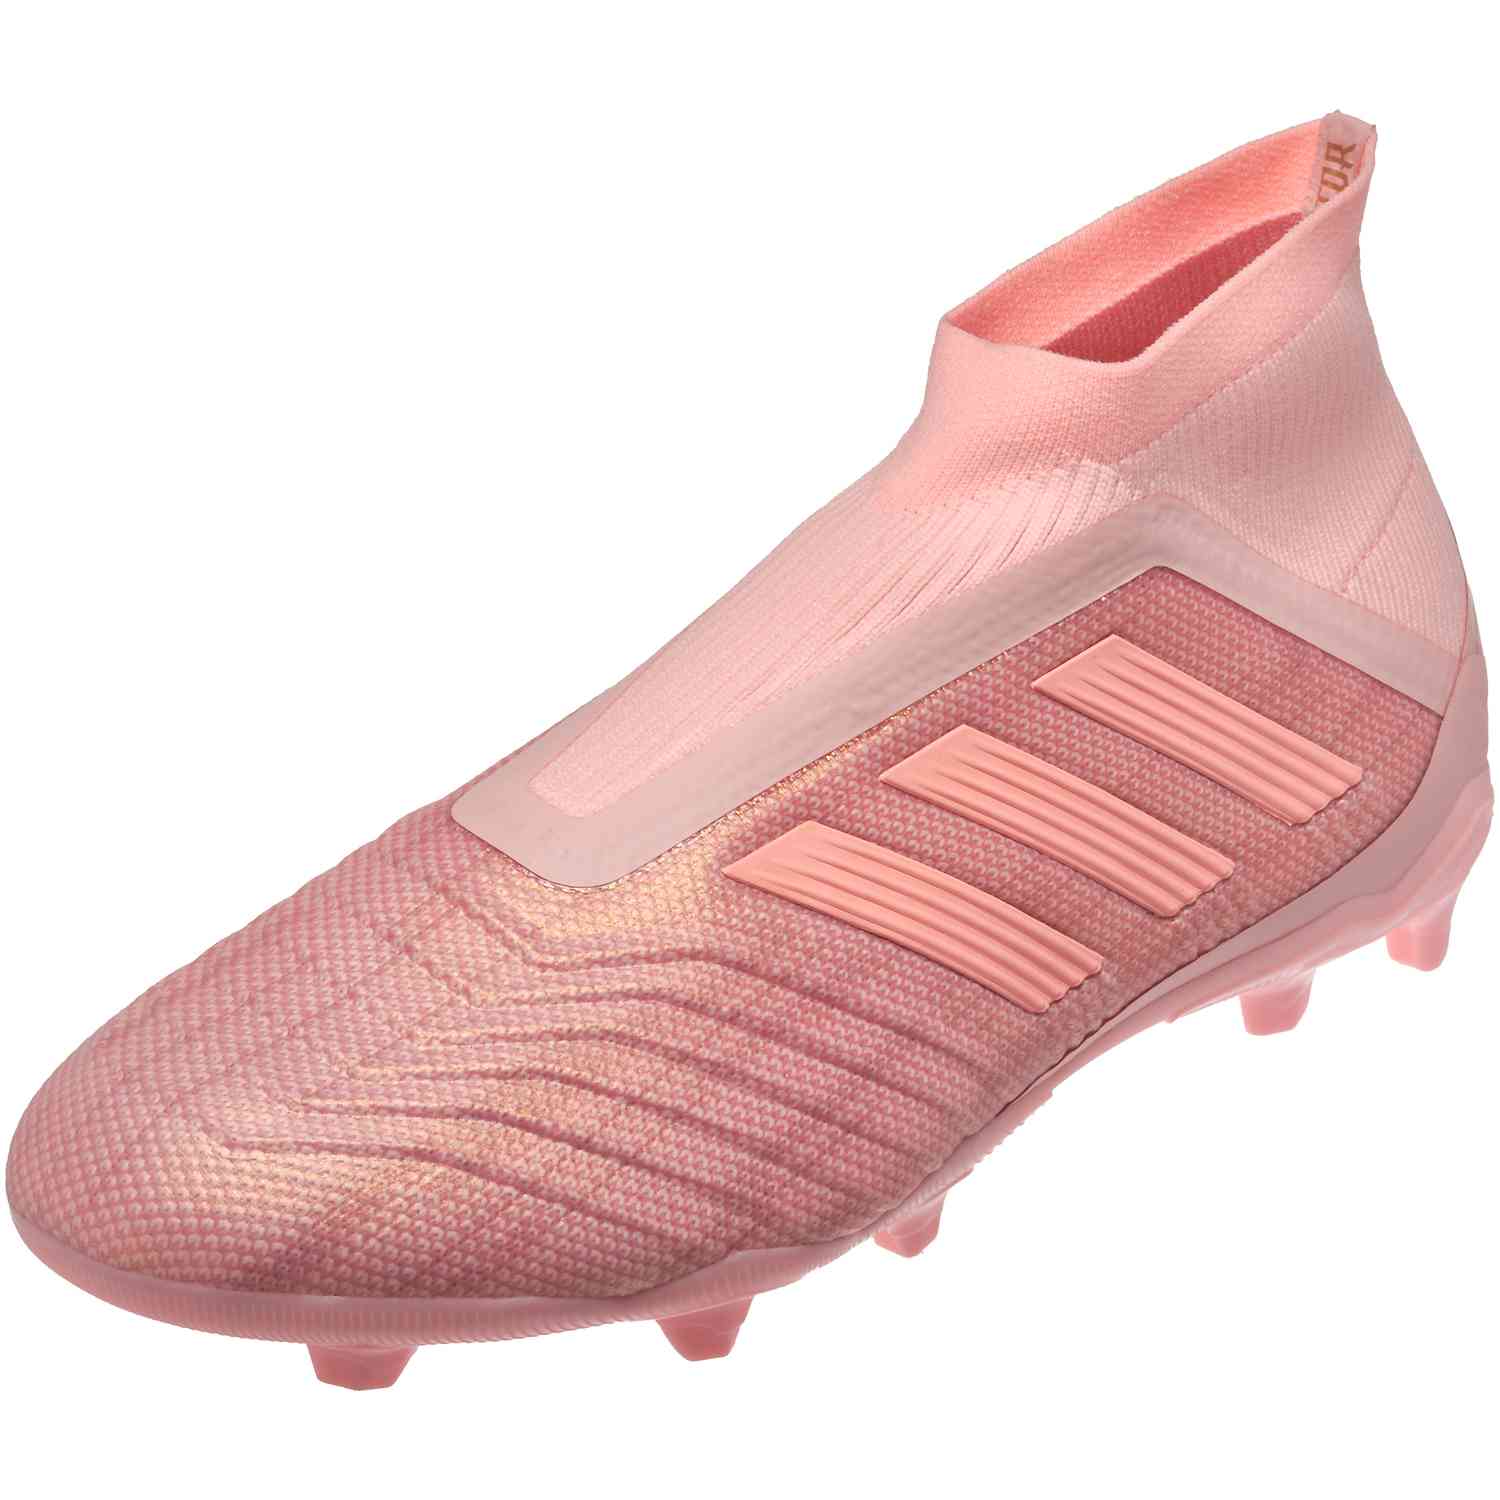 adidas Predator 18+ FG Youth - Orange/Trace Pink - Soccer Master